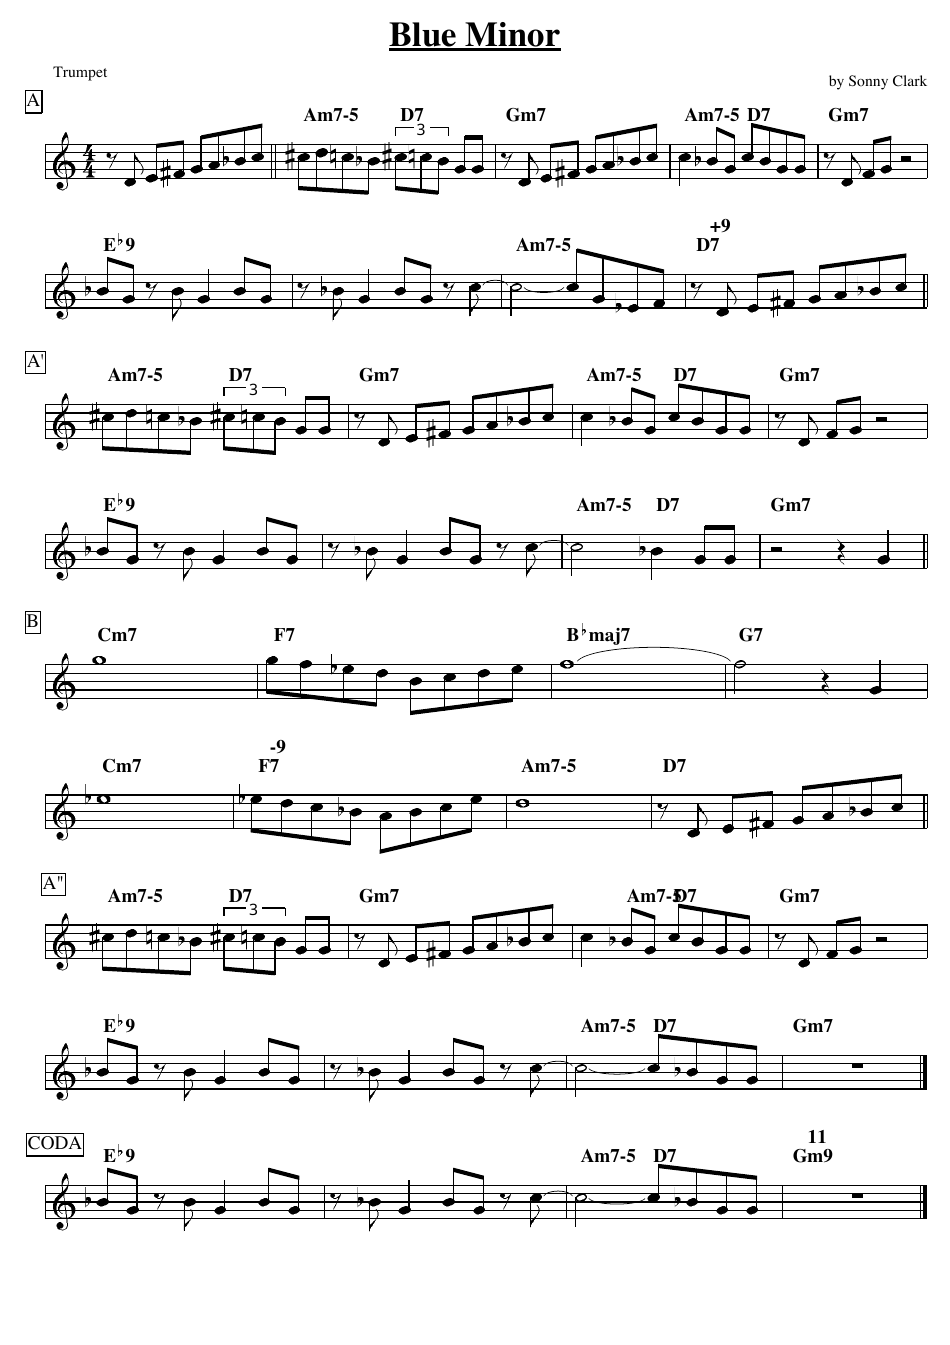 Sonny Clark - Blue Minor Trumpet Sheet Music Image Preview